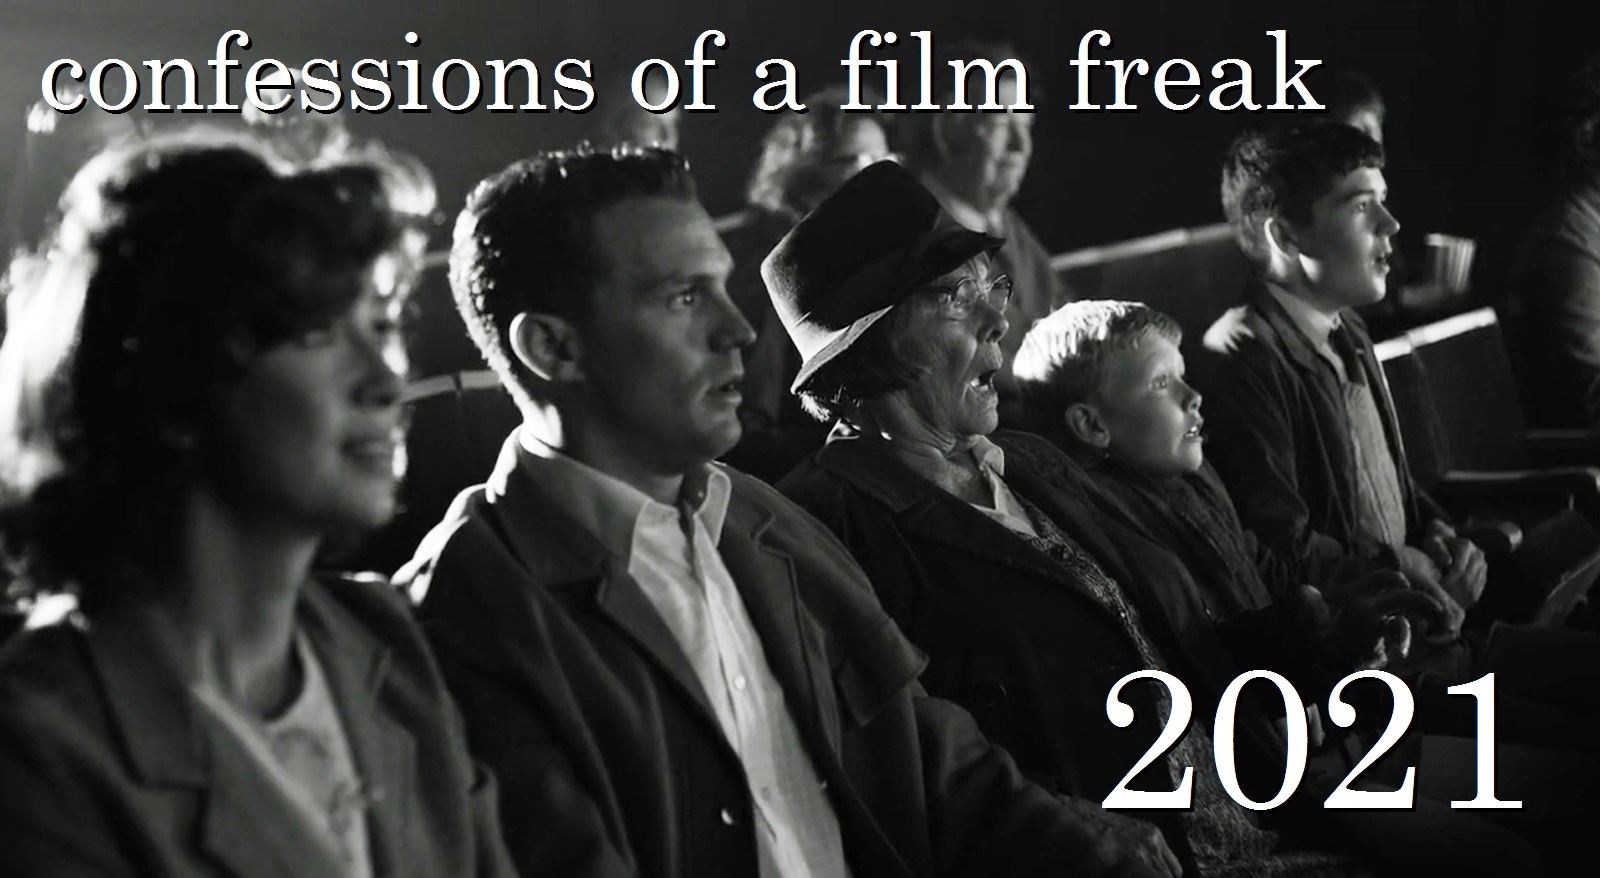 Confessions of a Film Freak 2021 film freedonia